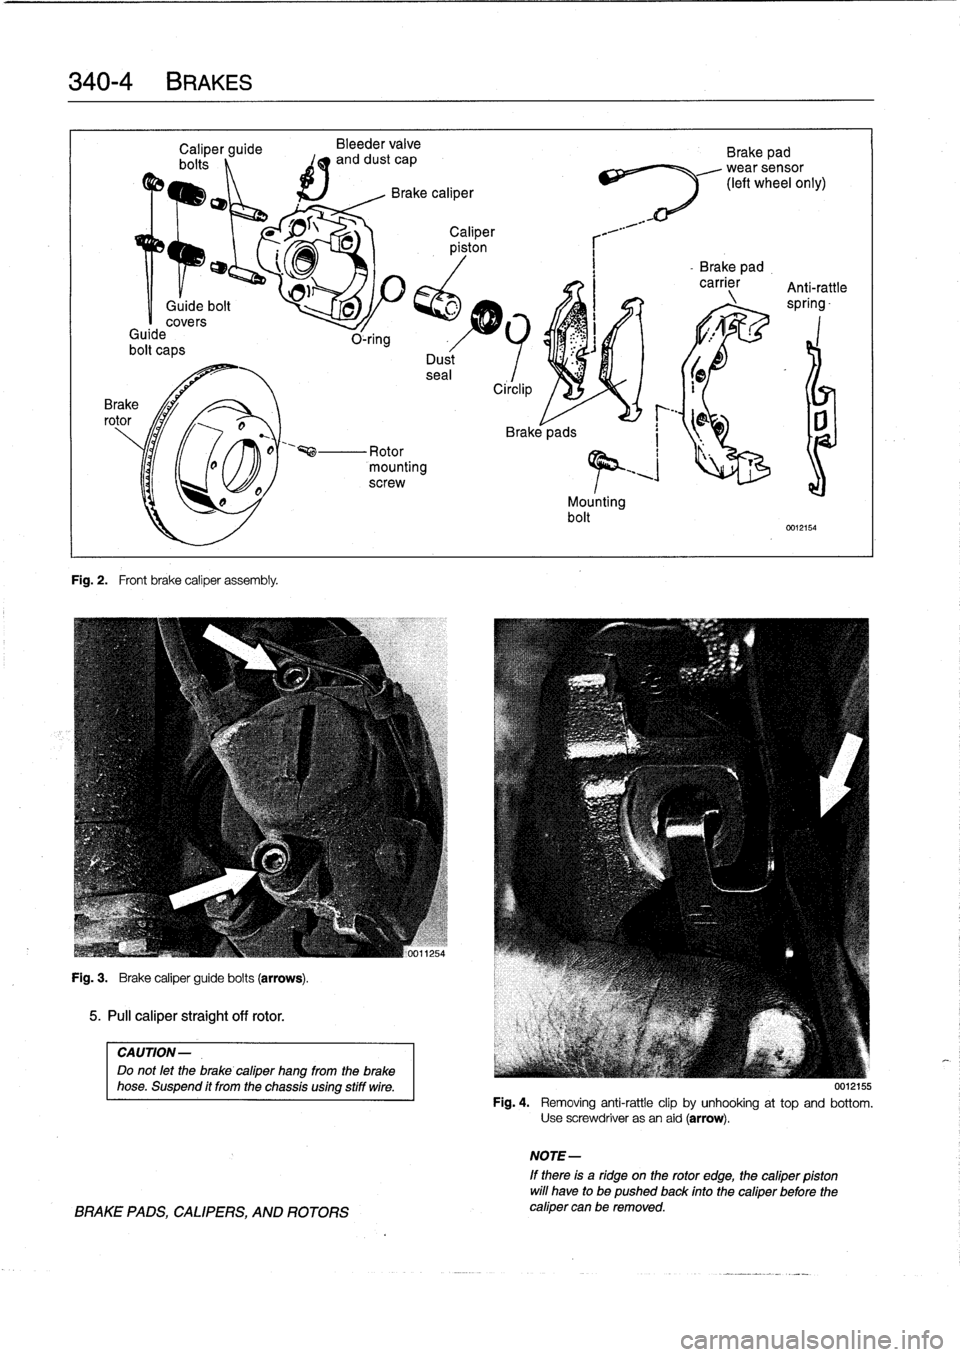 BMW 323i 1993 E36 Workshop Manual 
340-
4
BRAKES

Fig
.
2
.

	

Front
brake
caliper
assembly
.

Bleeder
valve
and
dust
cap

Mounting
bolt

Brake
pad
wearsensor
(left
wheel
only)

-
Brake
pad
.
carrier
Anti-rattle
^_
spring-

0012154

